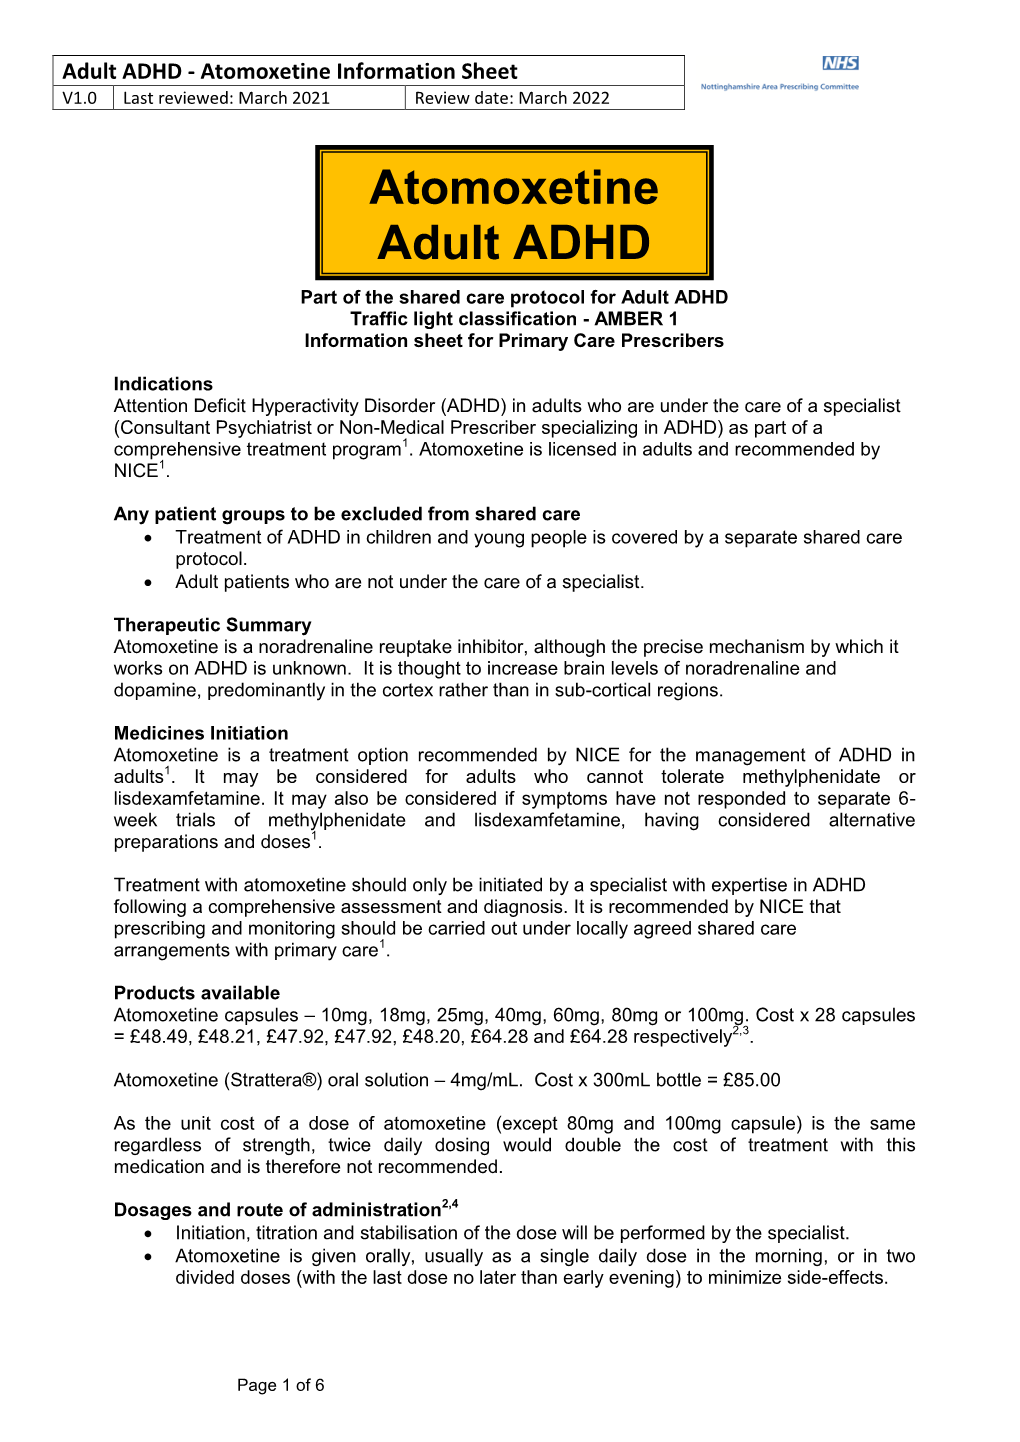 ADHD Adult- Atomoxetine Information Sheet